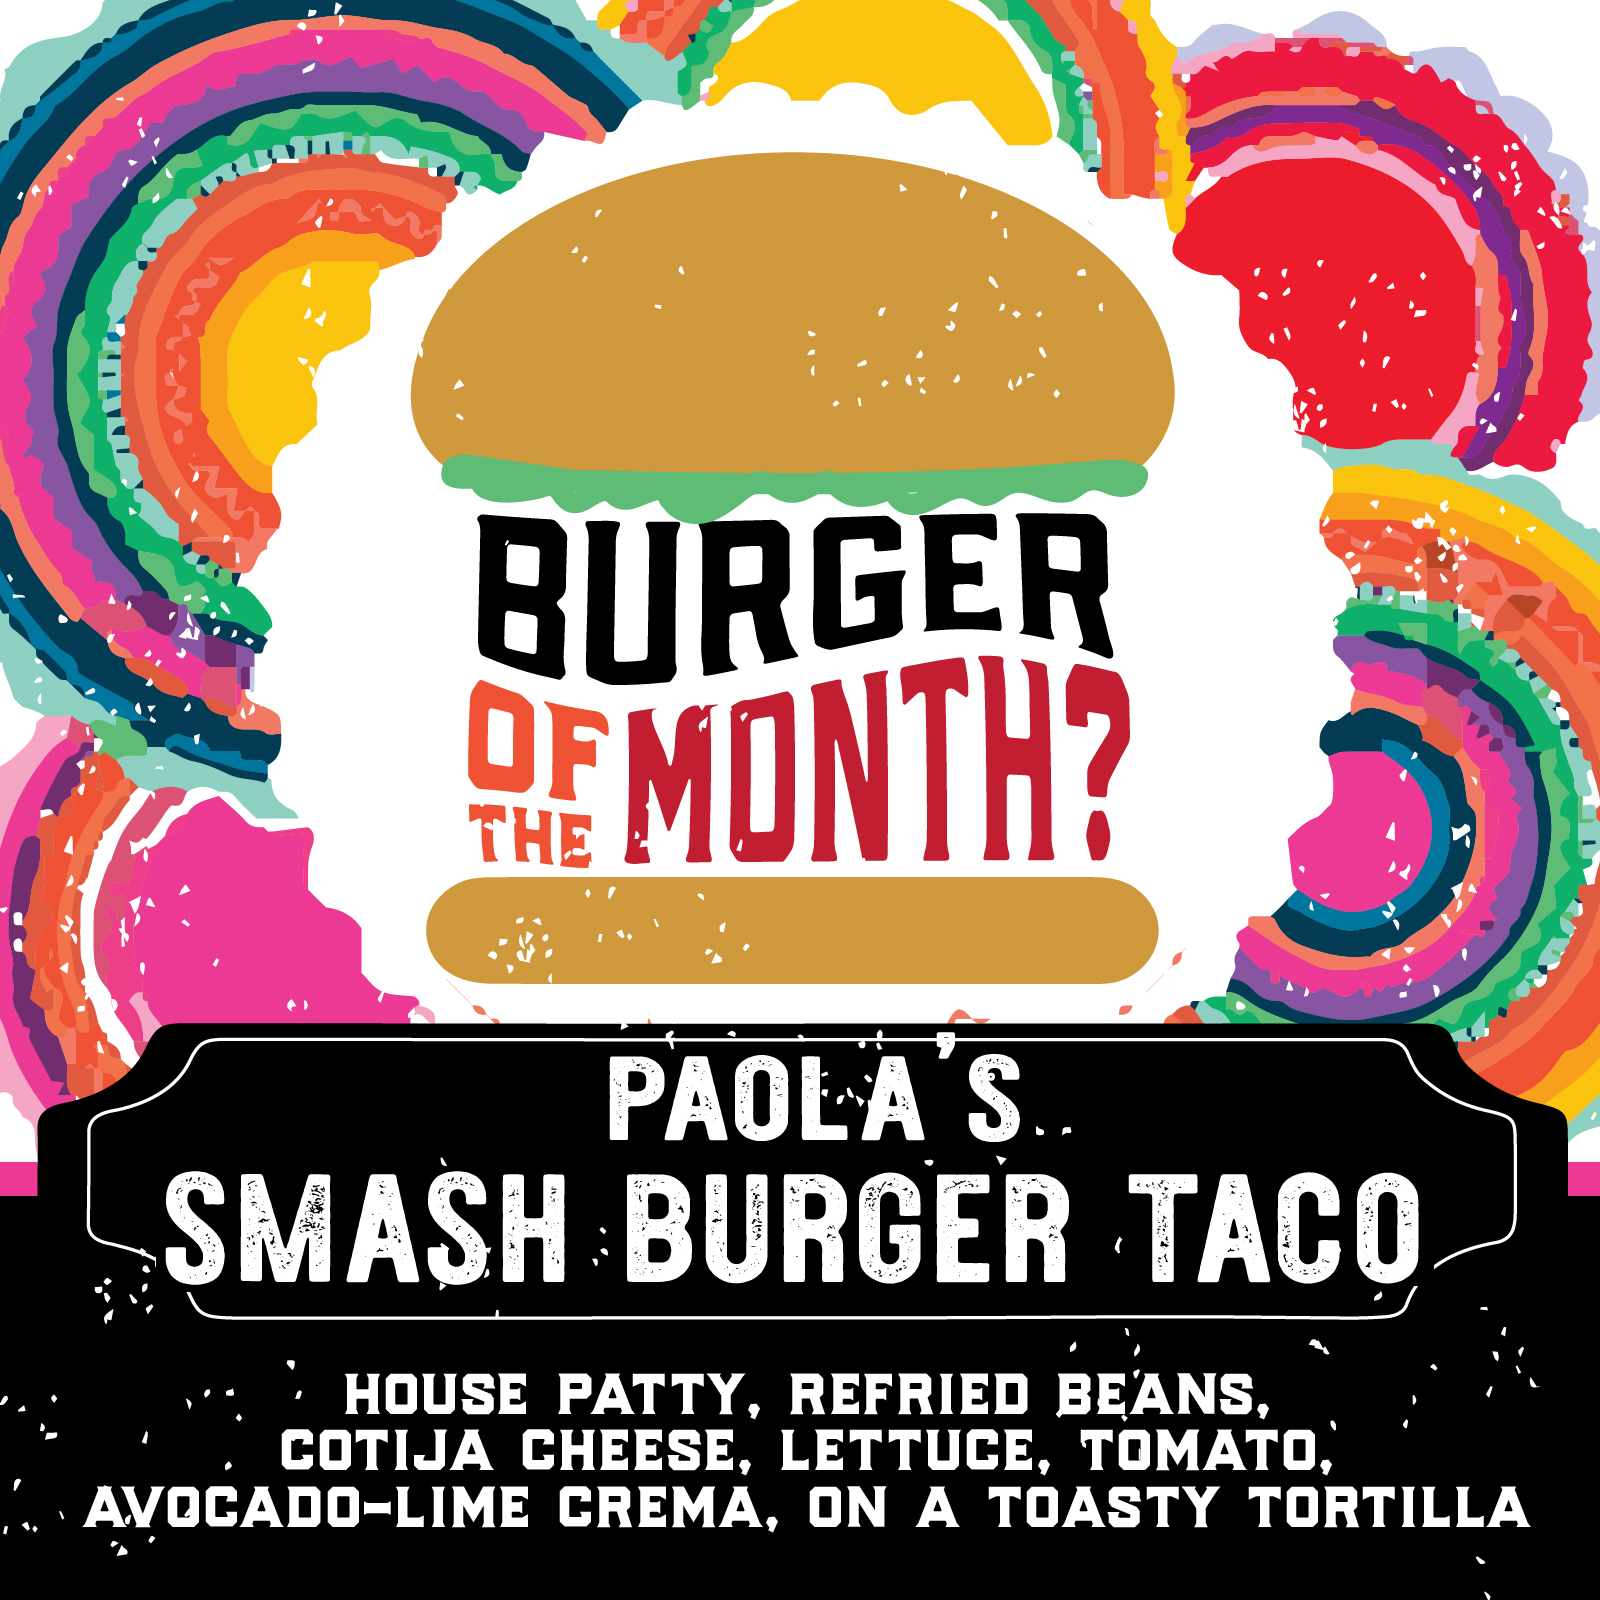 Paola's Smash Burger Taco